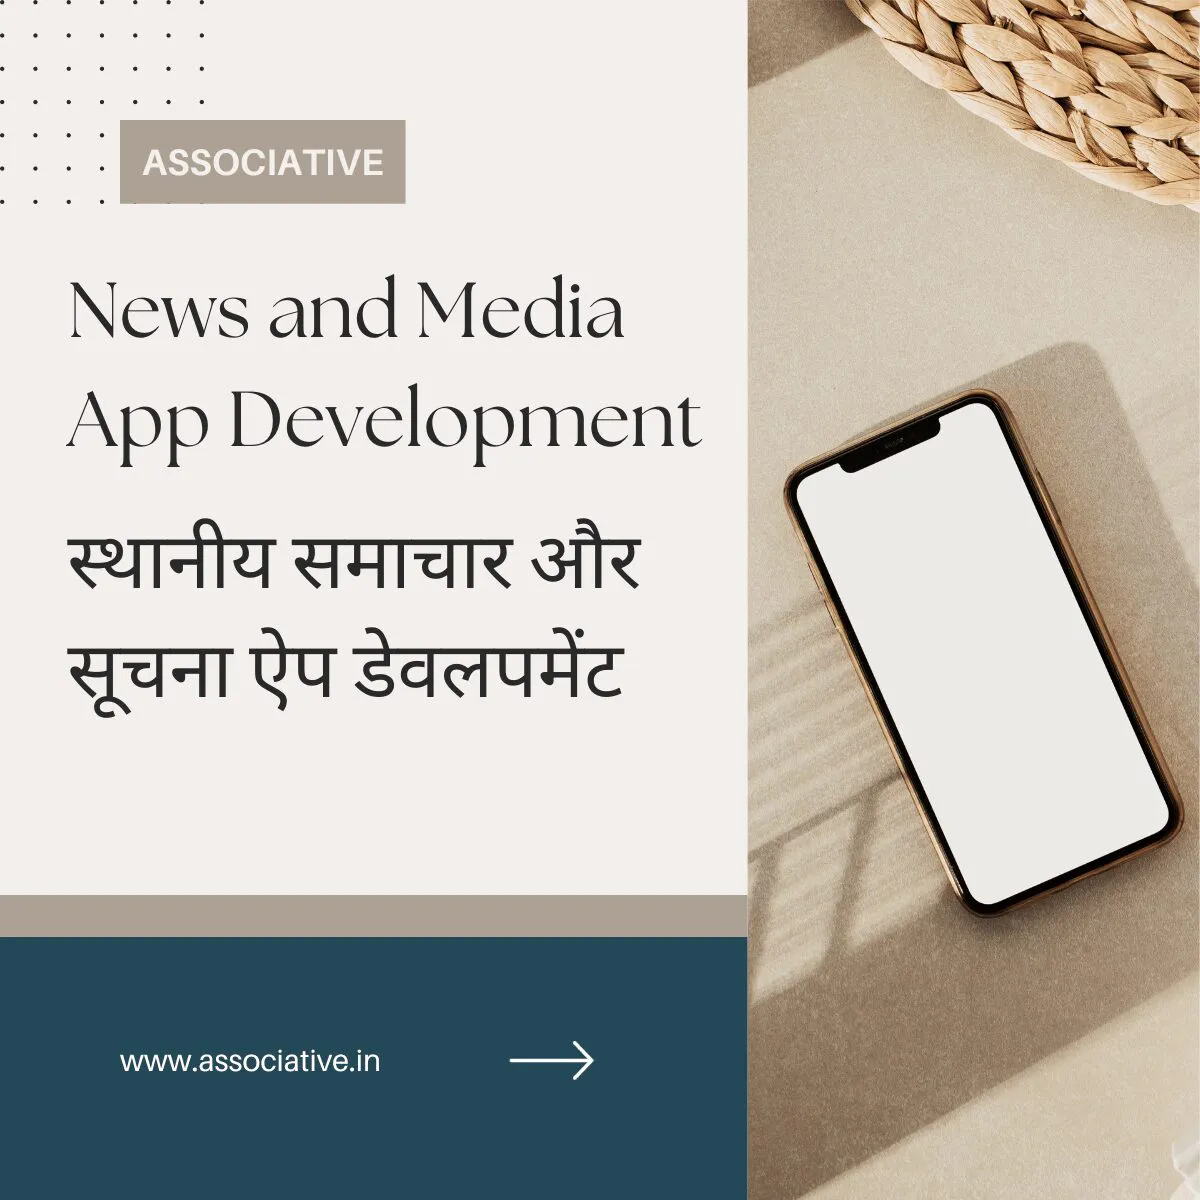 News and Media App Development